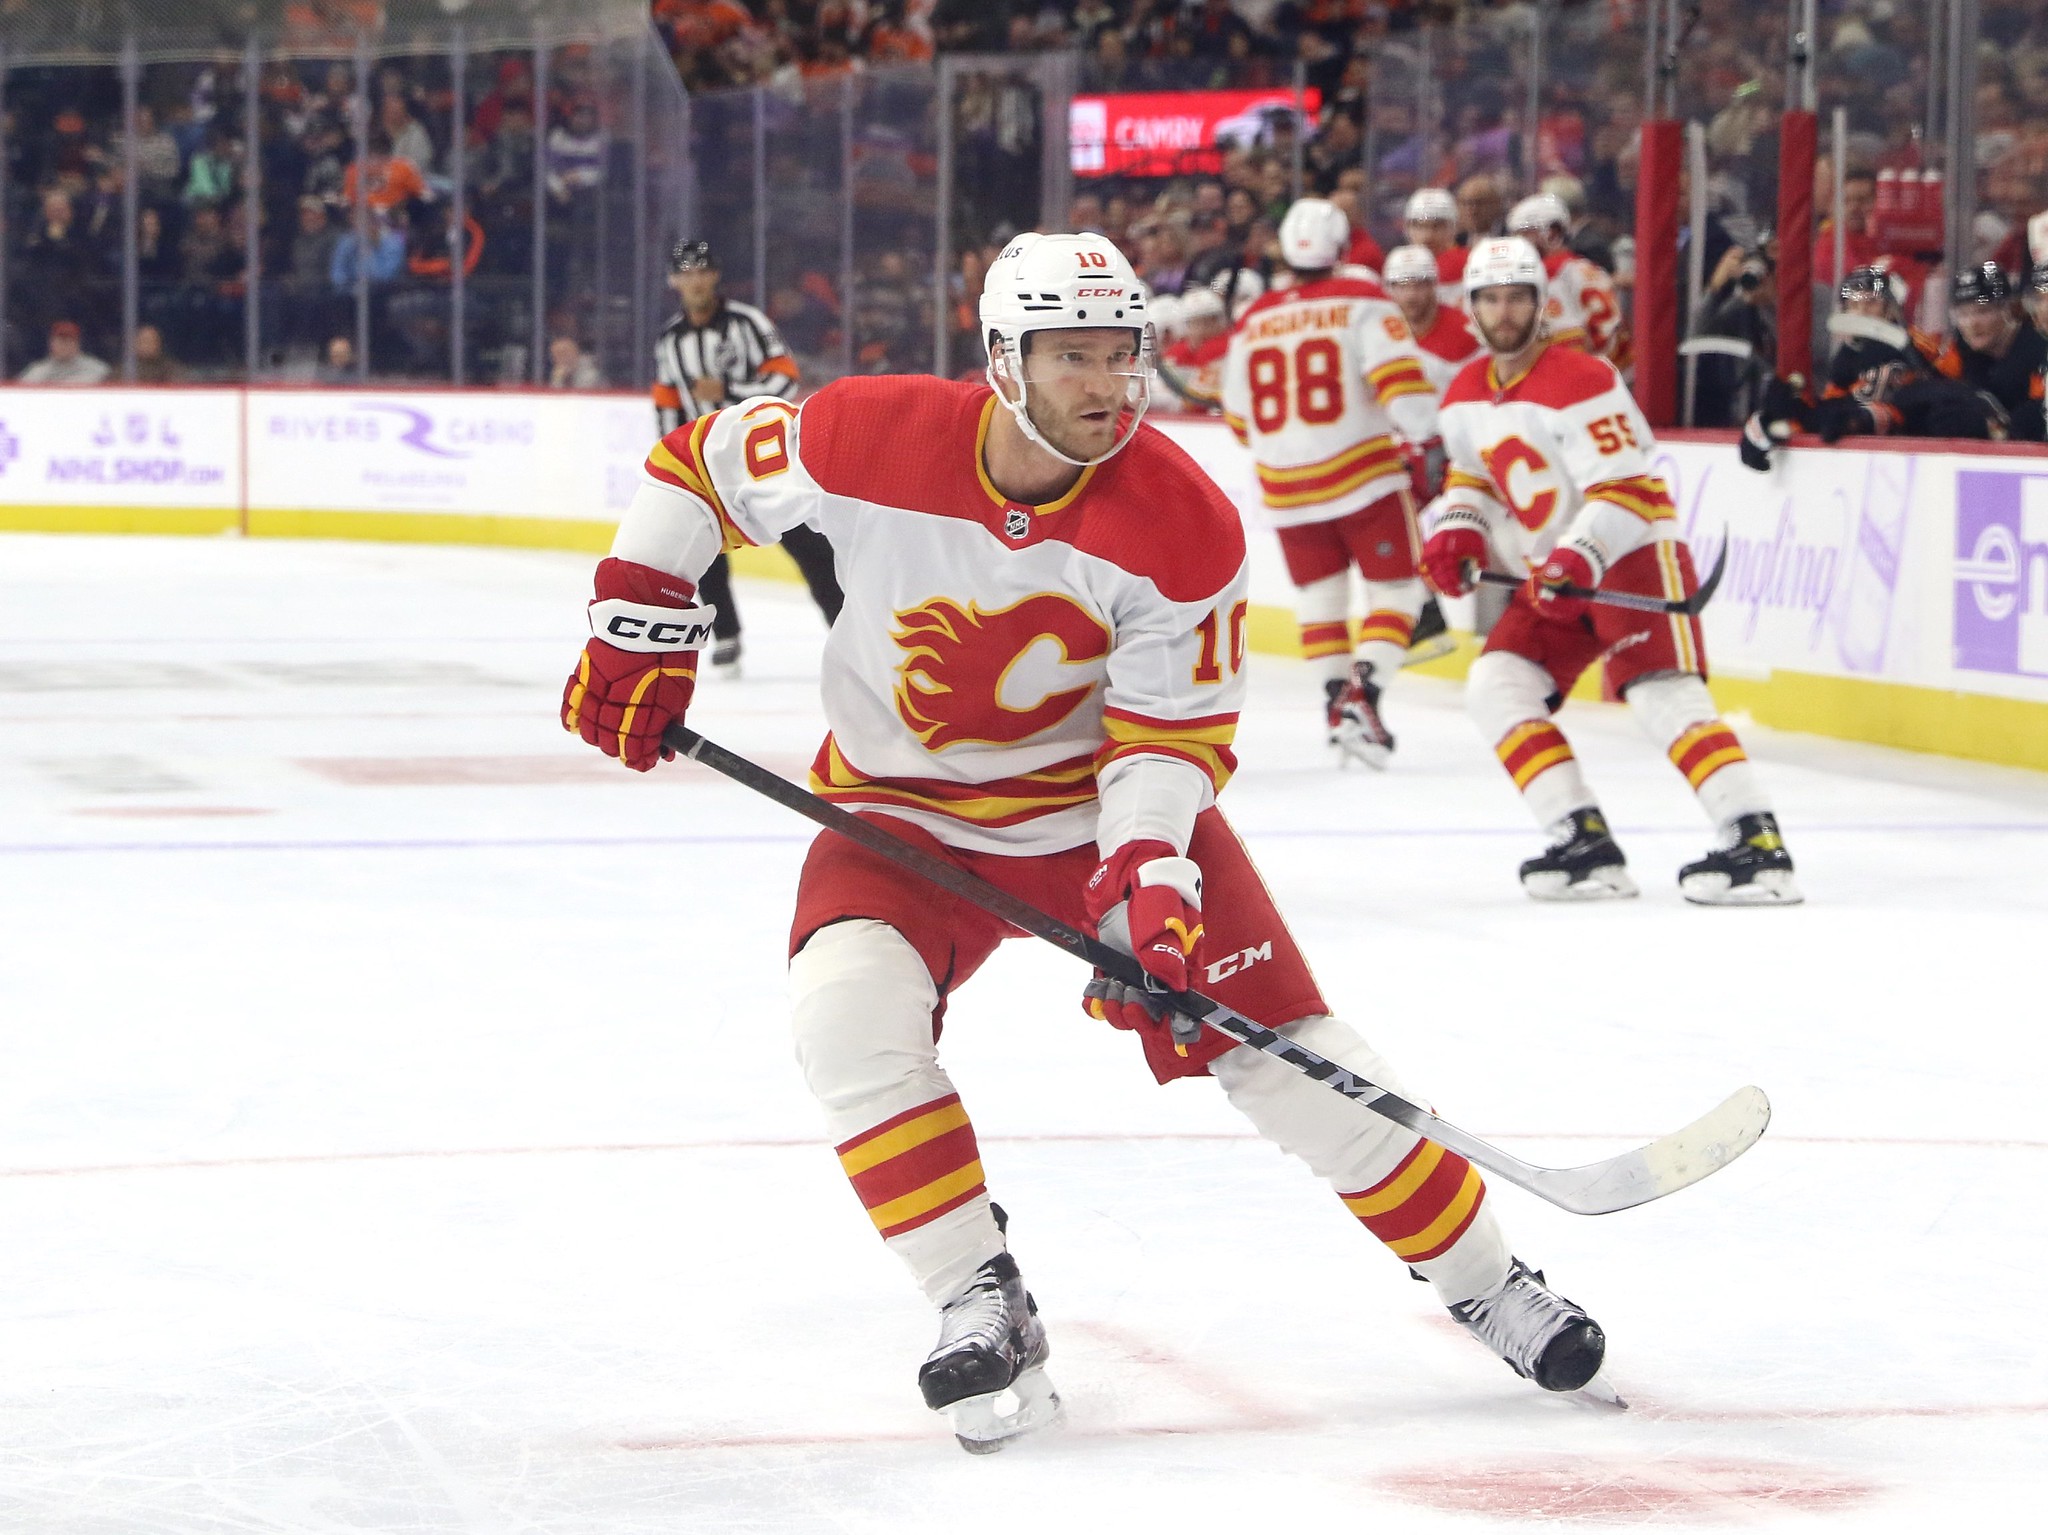 Calgary Flames: Jonathan Huberdeau 2023 Mini Cardstock Cutout - Offici –  Fathead